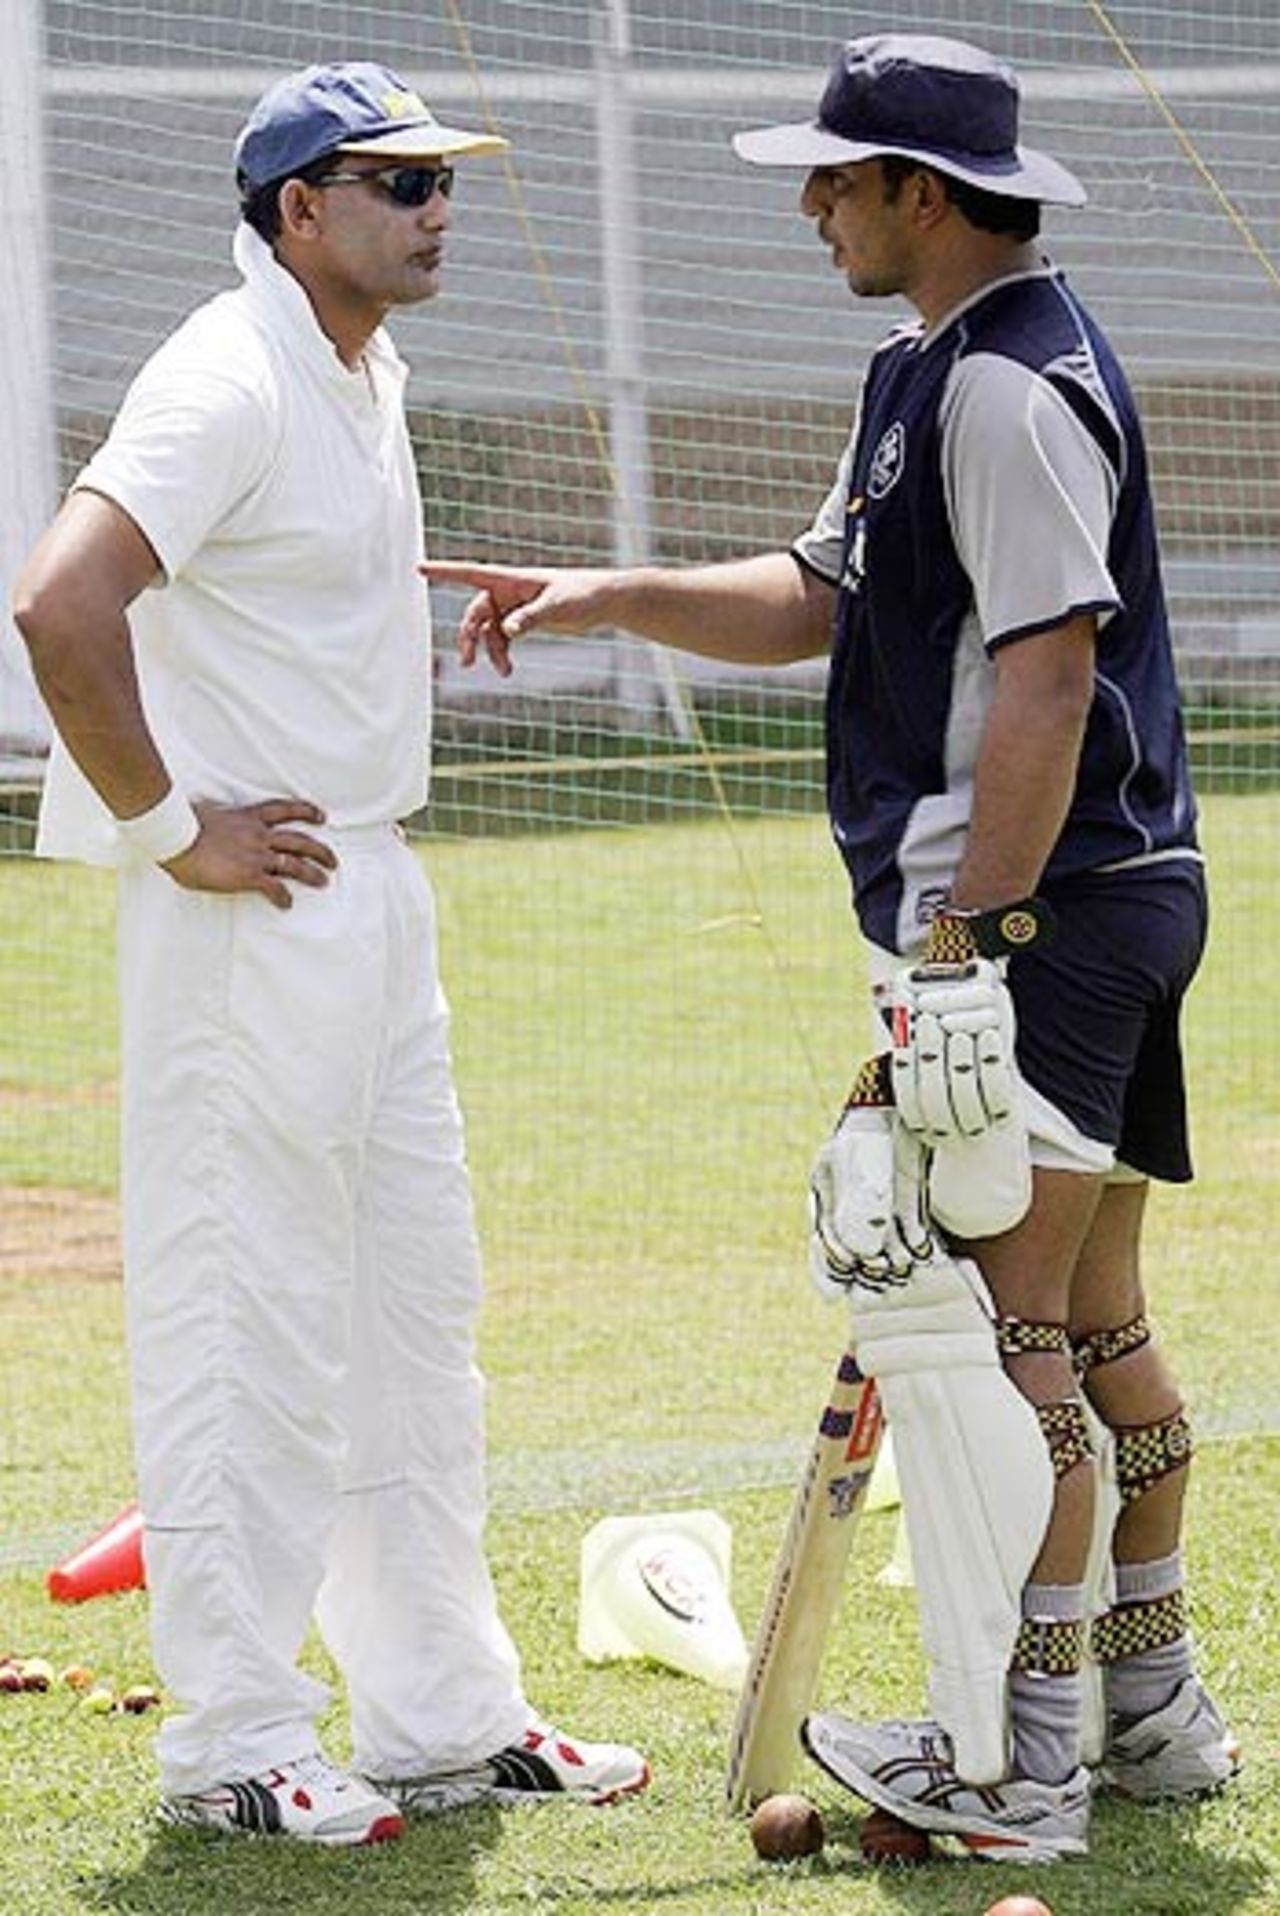 Mohammad Azharuddin and Azhar Mahmood chat during practice at the World Cricket Academy in Mumbai, Mumbai, March 27, 2006